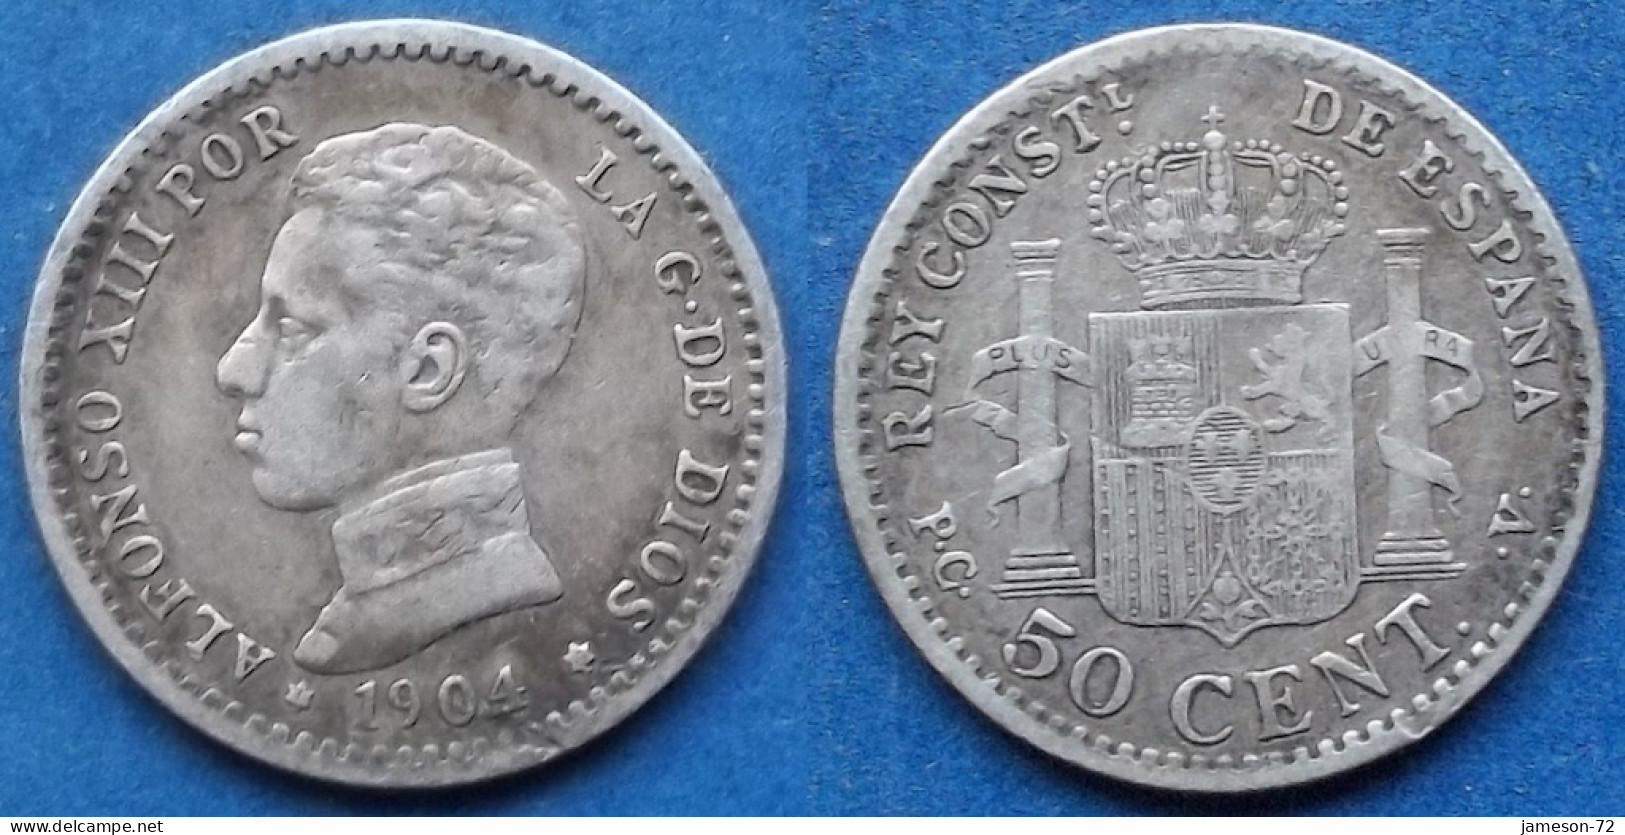 SPAIN - Silver 50 Centimos 1904 (10) PC V KM# 723 Alfonso XIII (1886-1931) - Edelweiss Coins - Eerste Muntslagen